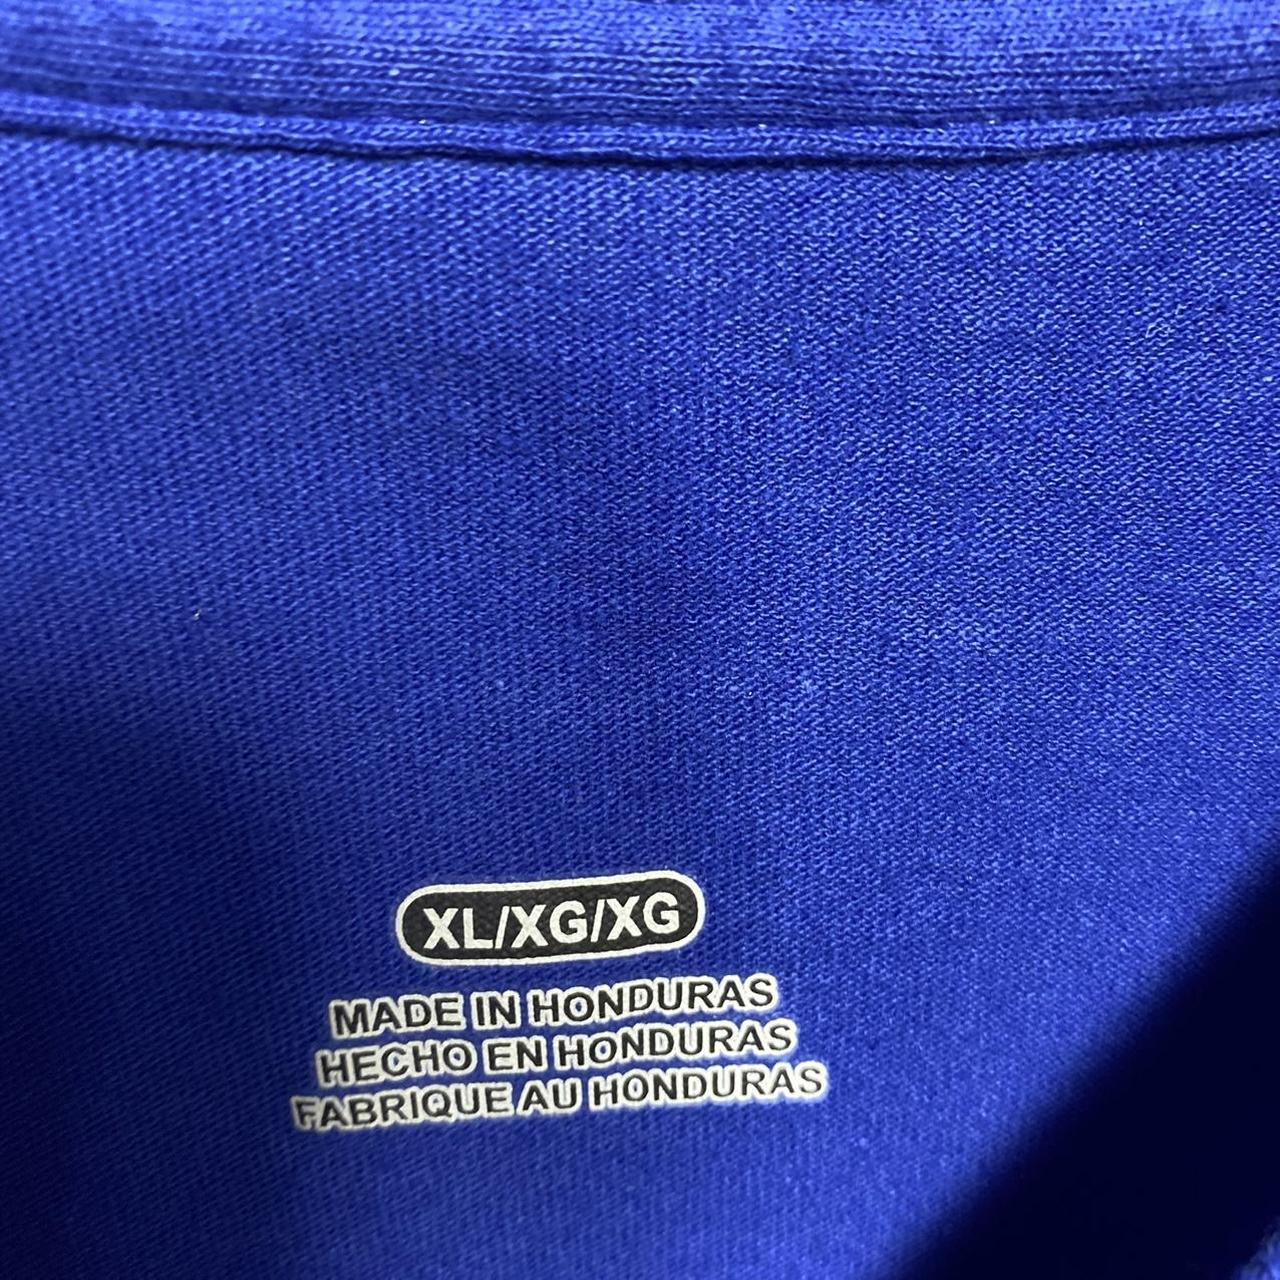 Chicago Cubs Shirt Mens 3xl Blue Copyrighted 2016 - Depop